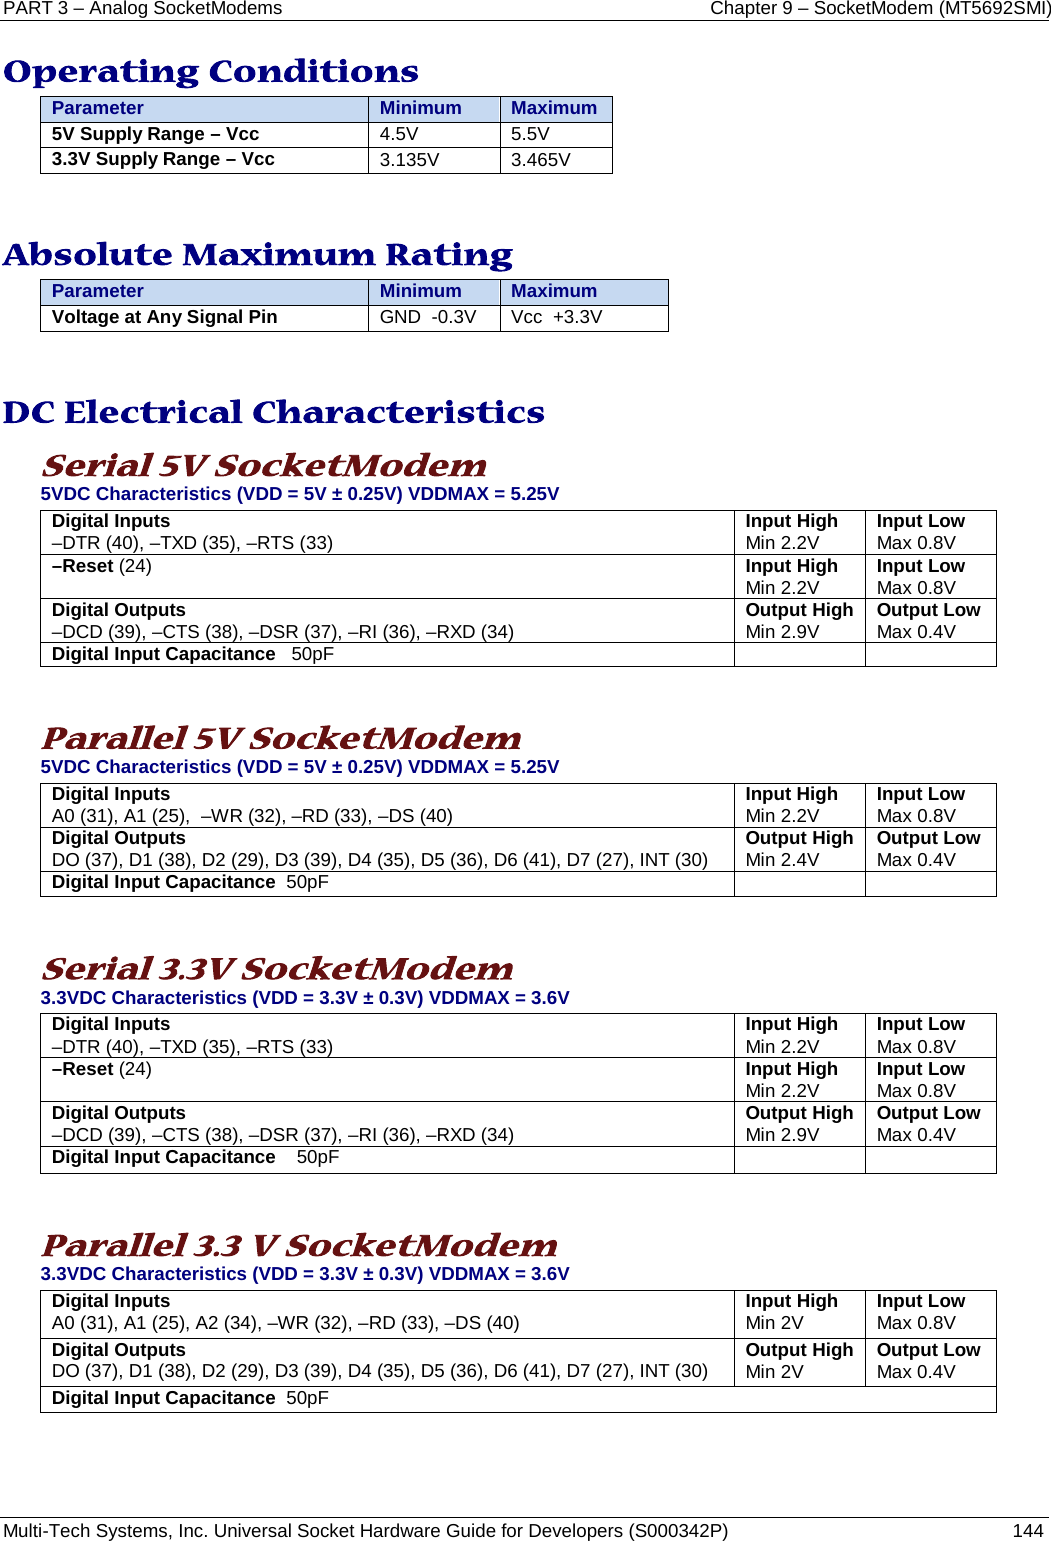 PART 3 – Analog SocketModems    Chapter 9 – SocketModem (MT5692SMI) Multi-Tech Systems, Inc. Universal Socket Hardware Guide for Developers (S000342P)  144  Operating Conditions Parameter Minimum Maximum 5V Supply Range – Vcc 4.5V 5.5V 3.3V Supply Range – Vcc 3.135V 3.465V    Absolute Maximum Rating Parameter Minimum Maximum Voltage at Any Signal Pin GND  -0.3V Vcc  +3.3V    DC Electrical Characteristics  Serial 5V SocketModem 5VDC Characteristics (VDD = 5V ± 0.25V) VDDMAX = 5.25V Digital Inputs –DTR (40), –TXD (35), –RTS (33) Input High Min 2.2V Input Low Max 0.8V –Reset (24) Input High Min 2.2V Input Low Max 0.8V Digital Outputs –DCD (39), –CTS (38), –DSR (37), –RI (36), –RXD (34) Output High  Min 2.9V Output Low Max 0.4V Digital Input Capacitance   50pF     Parallel 5V SocketModem  5VDC Characteristics (VDD = 5V ± 0.25V) VDDMAX = 5.25V Digital Inputs  A0 (31), A1 (25),  –WR (32), –RD (33), –DS (40) Input High Min 2.2V Input Low Max 0.8V Digital Outputs  DO (37), D1 (38), D2 (29), D3 (39), D4 (35), D5 (36), D6 (41), D7 (27), INT (30) Output High  Min 2.4V Output Low Max 0.4V Digital Input Capacitance  50pF     Serial 3.3V SocketModem 3.3VDC Characteristics (VDD = 3.3V ± 0.3V) VDDMAX = 3.6V Digital Inputs –DTR (40), –TXD (35), –RTS (33) Input High Min 2.2V Input Low Max 0.8V –Reset (24) Input High Min 2.2V Input Low Max 0.8V Digital Outputs –DCD (39), –CTS (38), –DSR (37), –RI (36), –RXD (34) Output High  Min 2.9V Output Low Max 0.4V Digital Input Capacitance    50pF     Parallel 3.3 V SocketModem 3.3VDC Characteristics (VDD = 3.3V ± 0.3V) VDDMAX = 3.6V Digital Inputs A0 (31), A1 (25), A2 (34), –WR (32), –RD (33), –DS (40) Input High Min 2V Input Low Max 0.8V Digital Outputs DO (37), D1 (38), D2 (29), D3 (39), D4 (35), D5 (36), D6 (41), D7 (27), INT (30) Output High Min 2V Output Low  Max 0.4V Digital Input Capacitance  50pF    